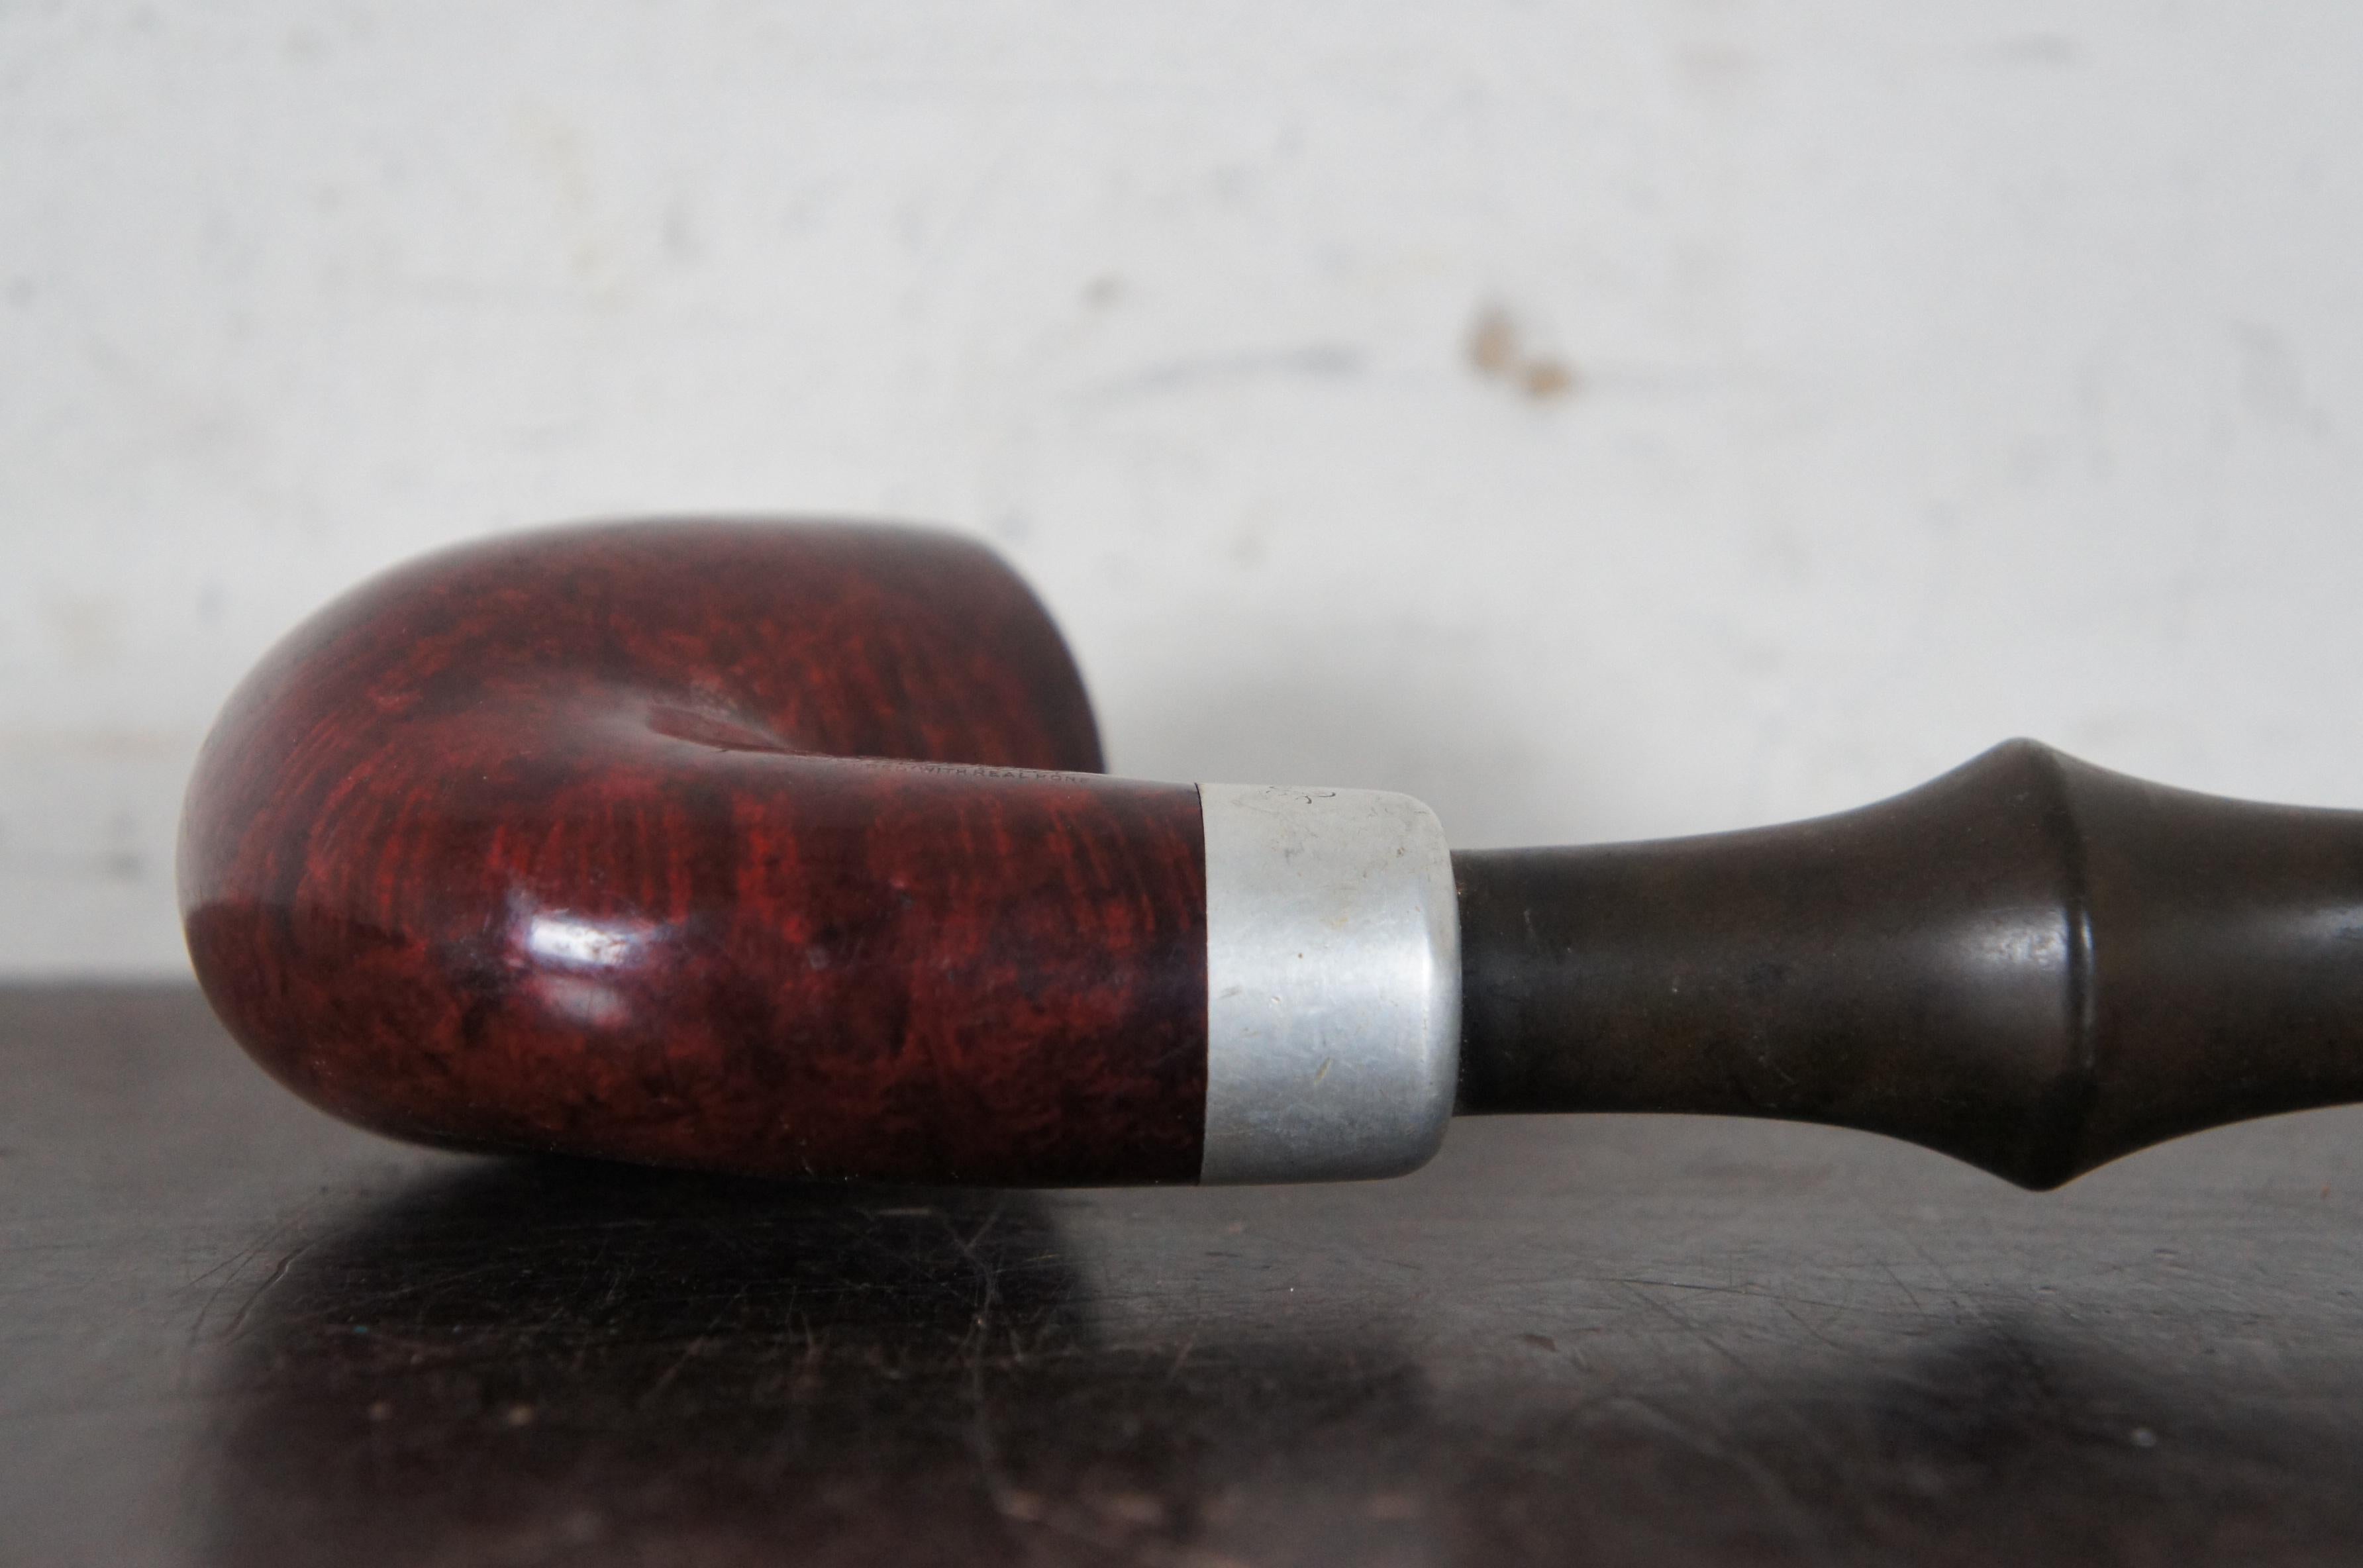 Hardwood Vintage Yello Bole Imperial Algerian Bruyere Briar Sherlock Smoking Pipe